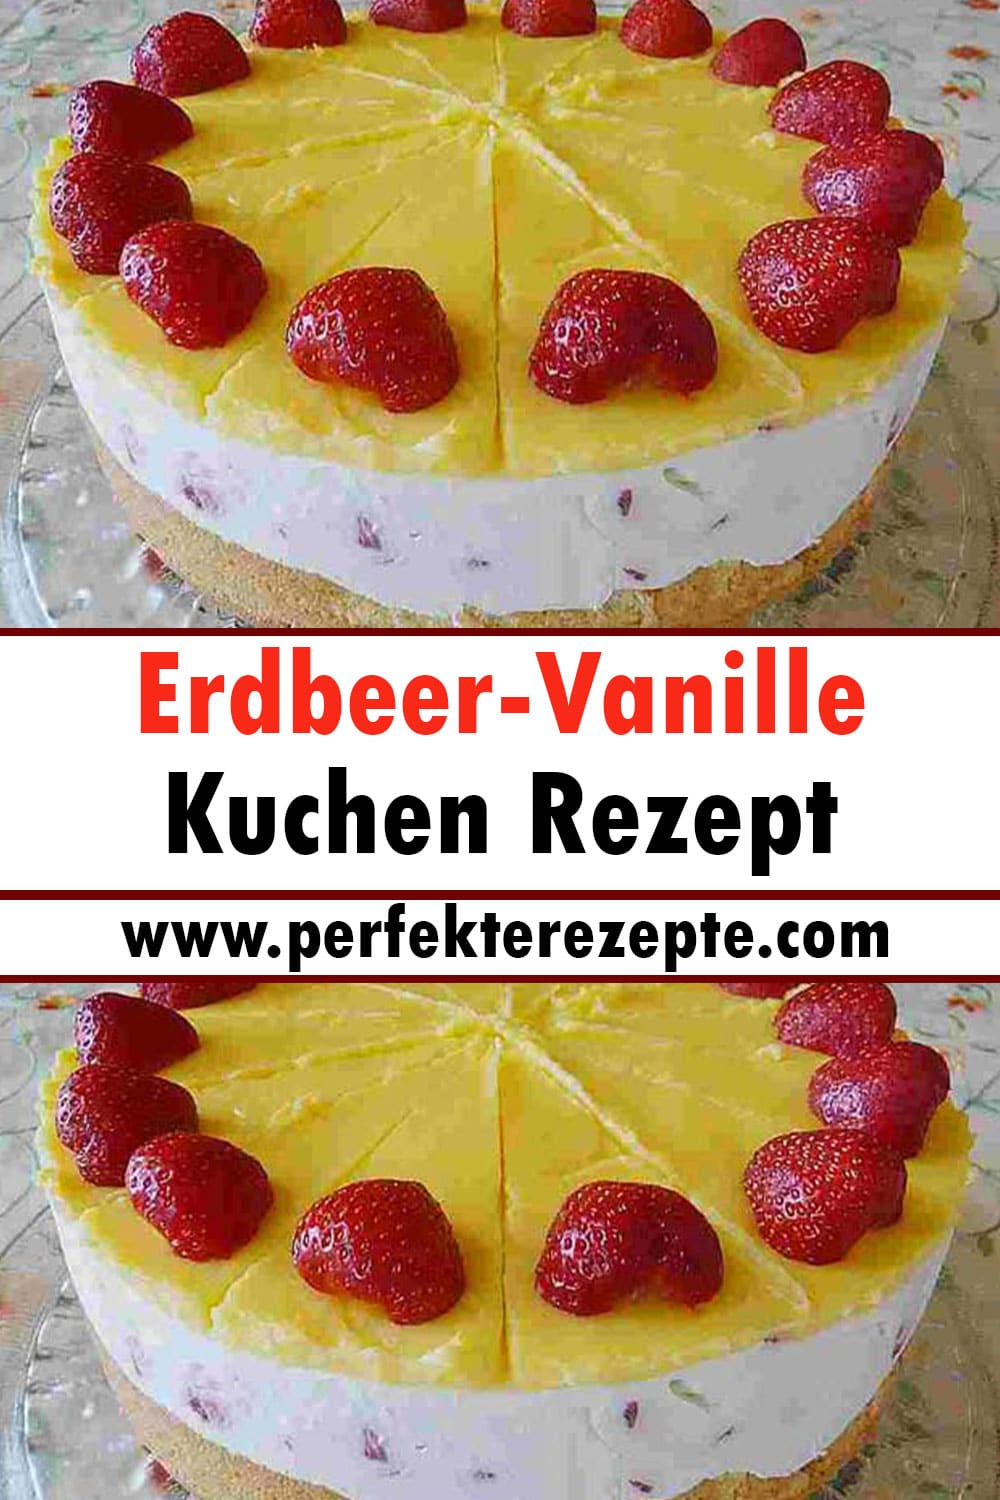 Erdbeer-Vanille Kuchen Rezept